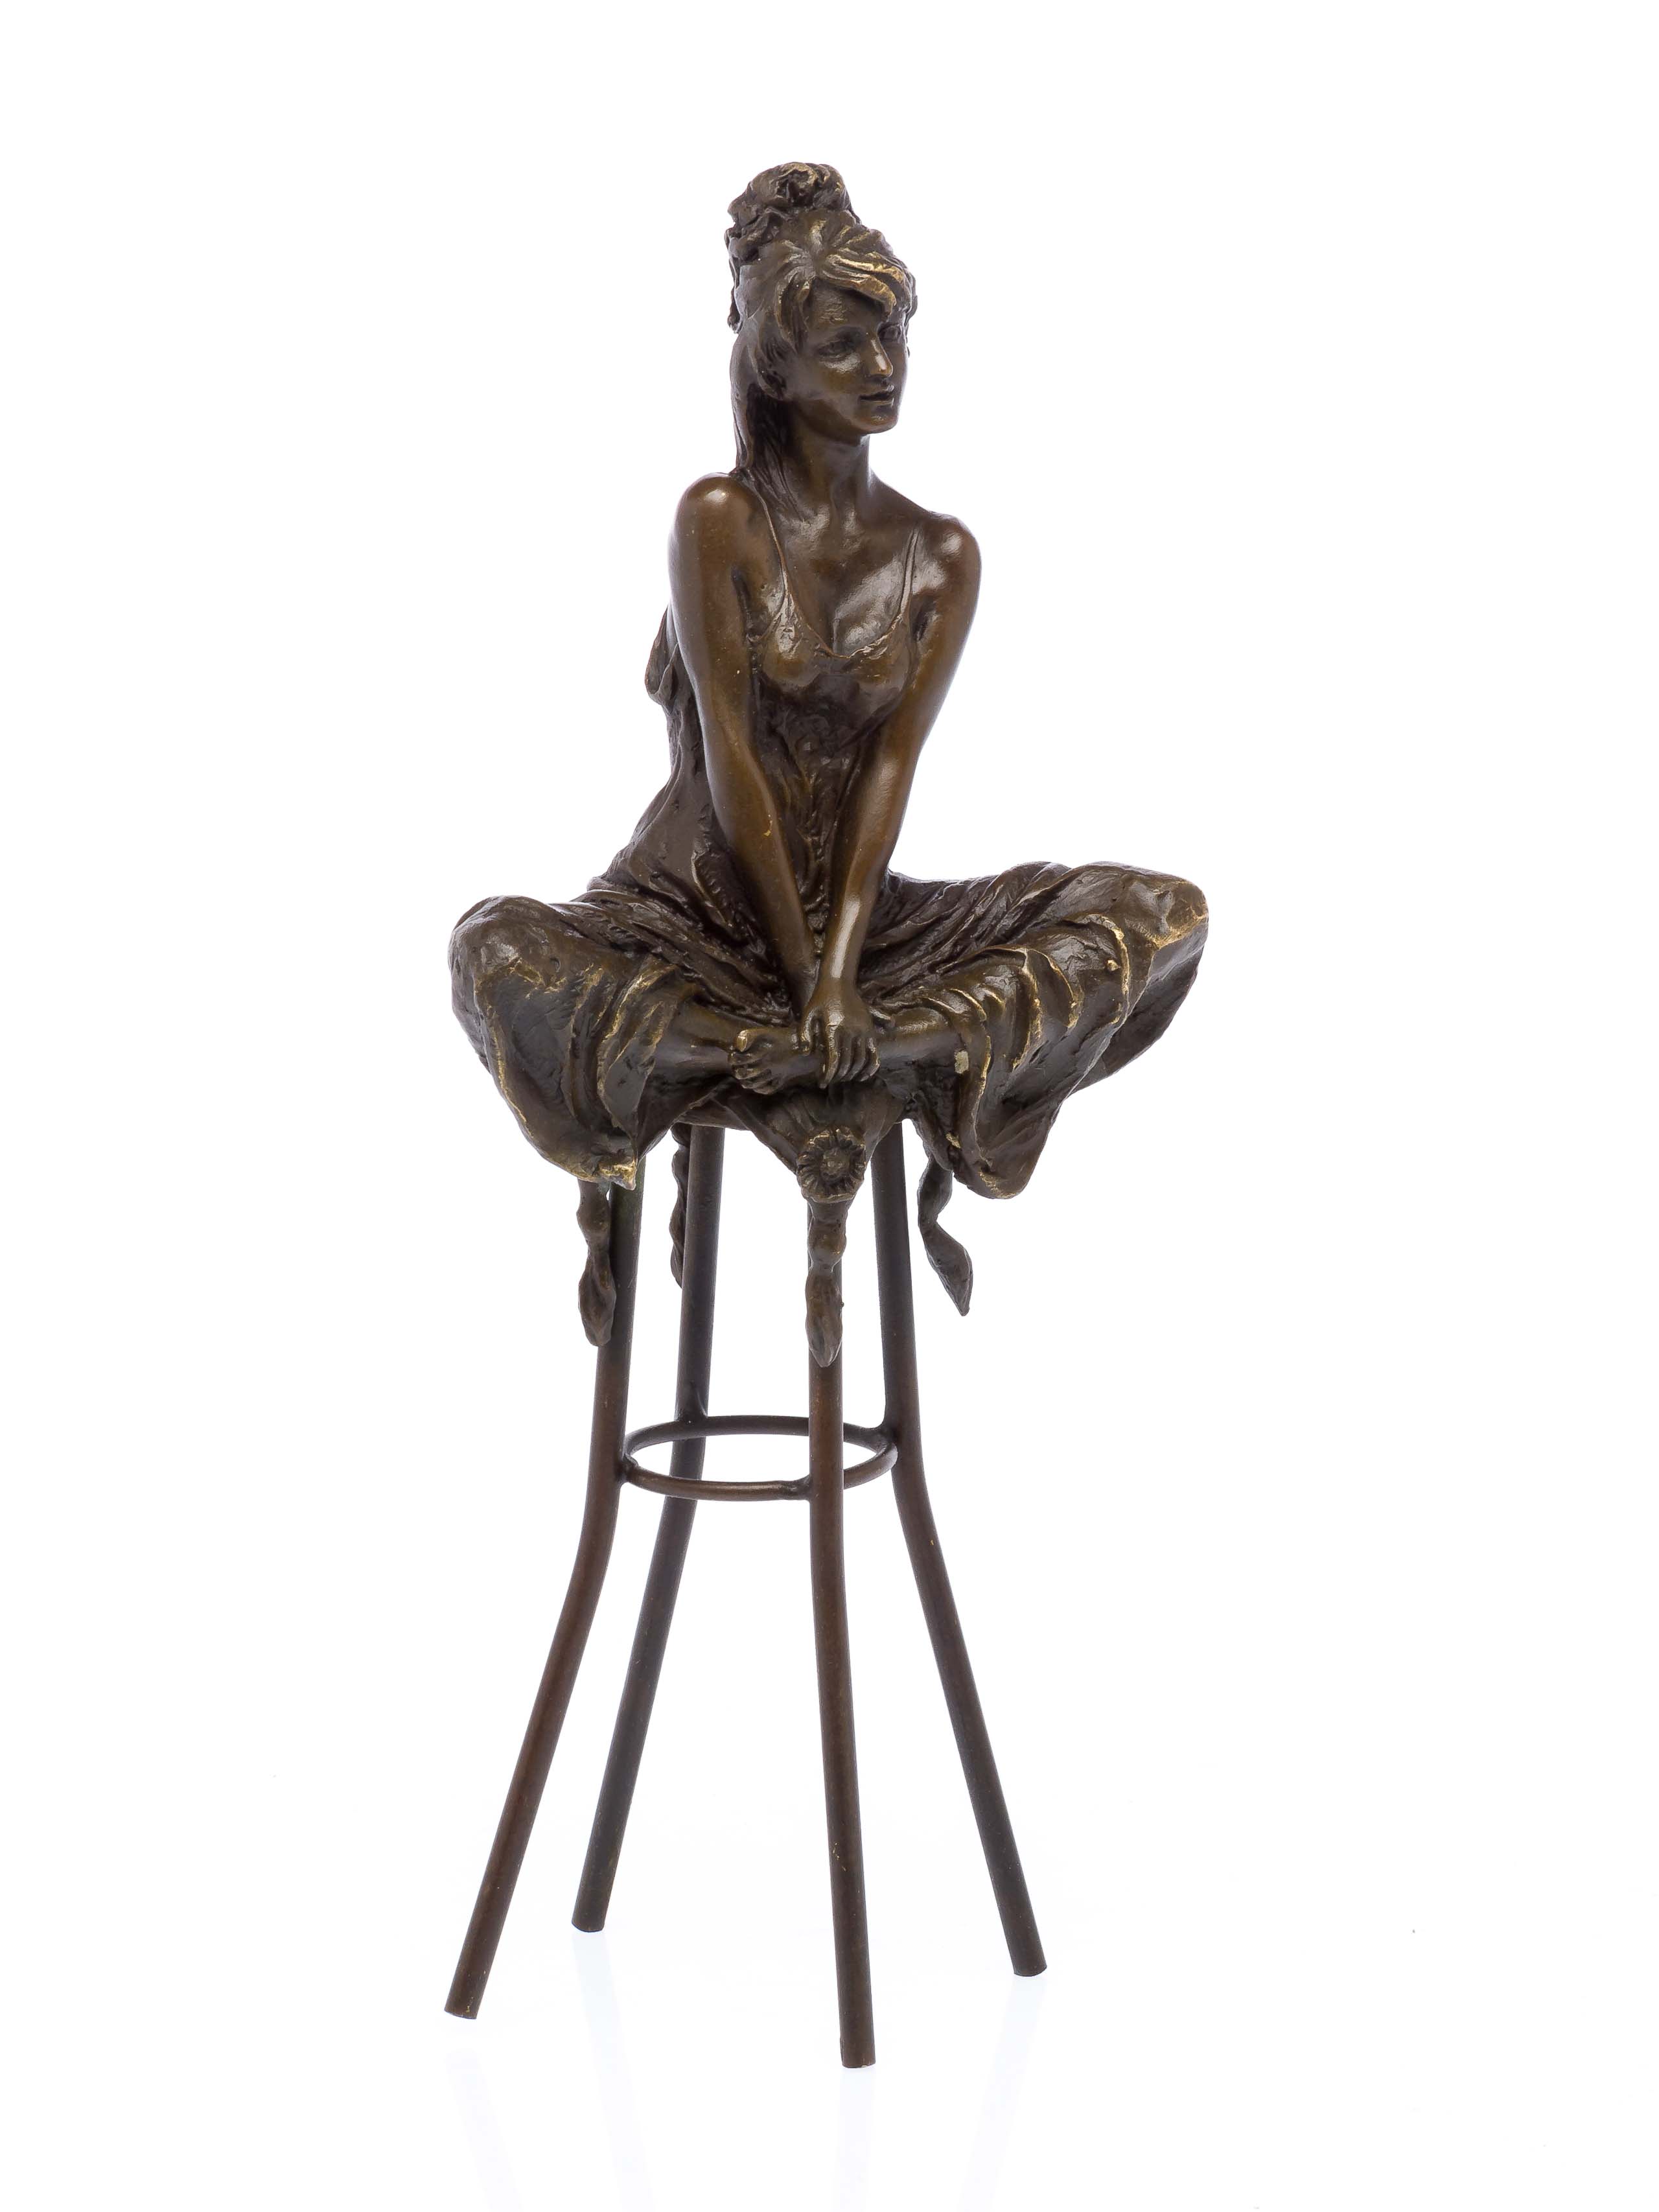 Bronzeskulptur Frau auf Barhocker Bar Bronze Figur Skulptur sculpture woman 